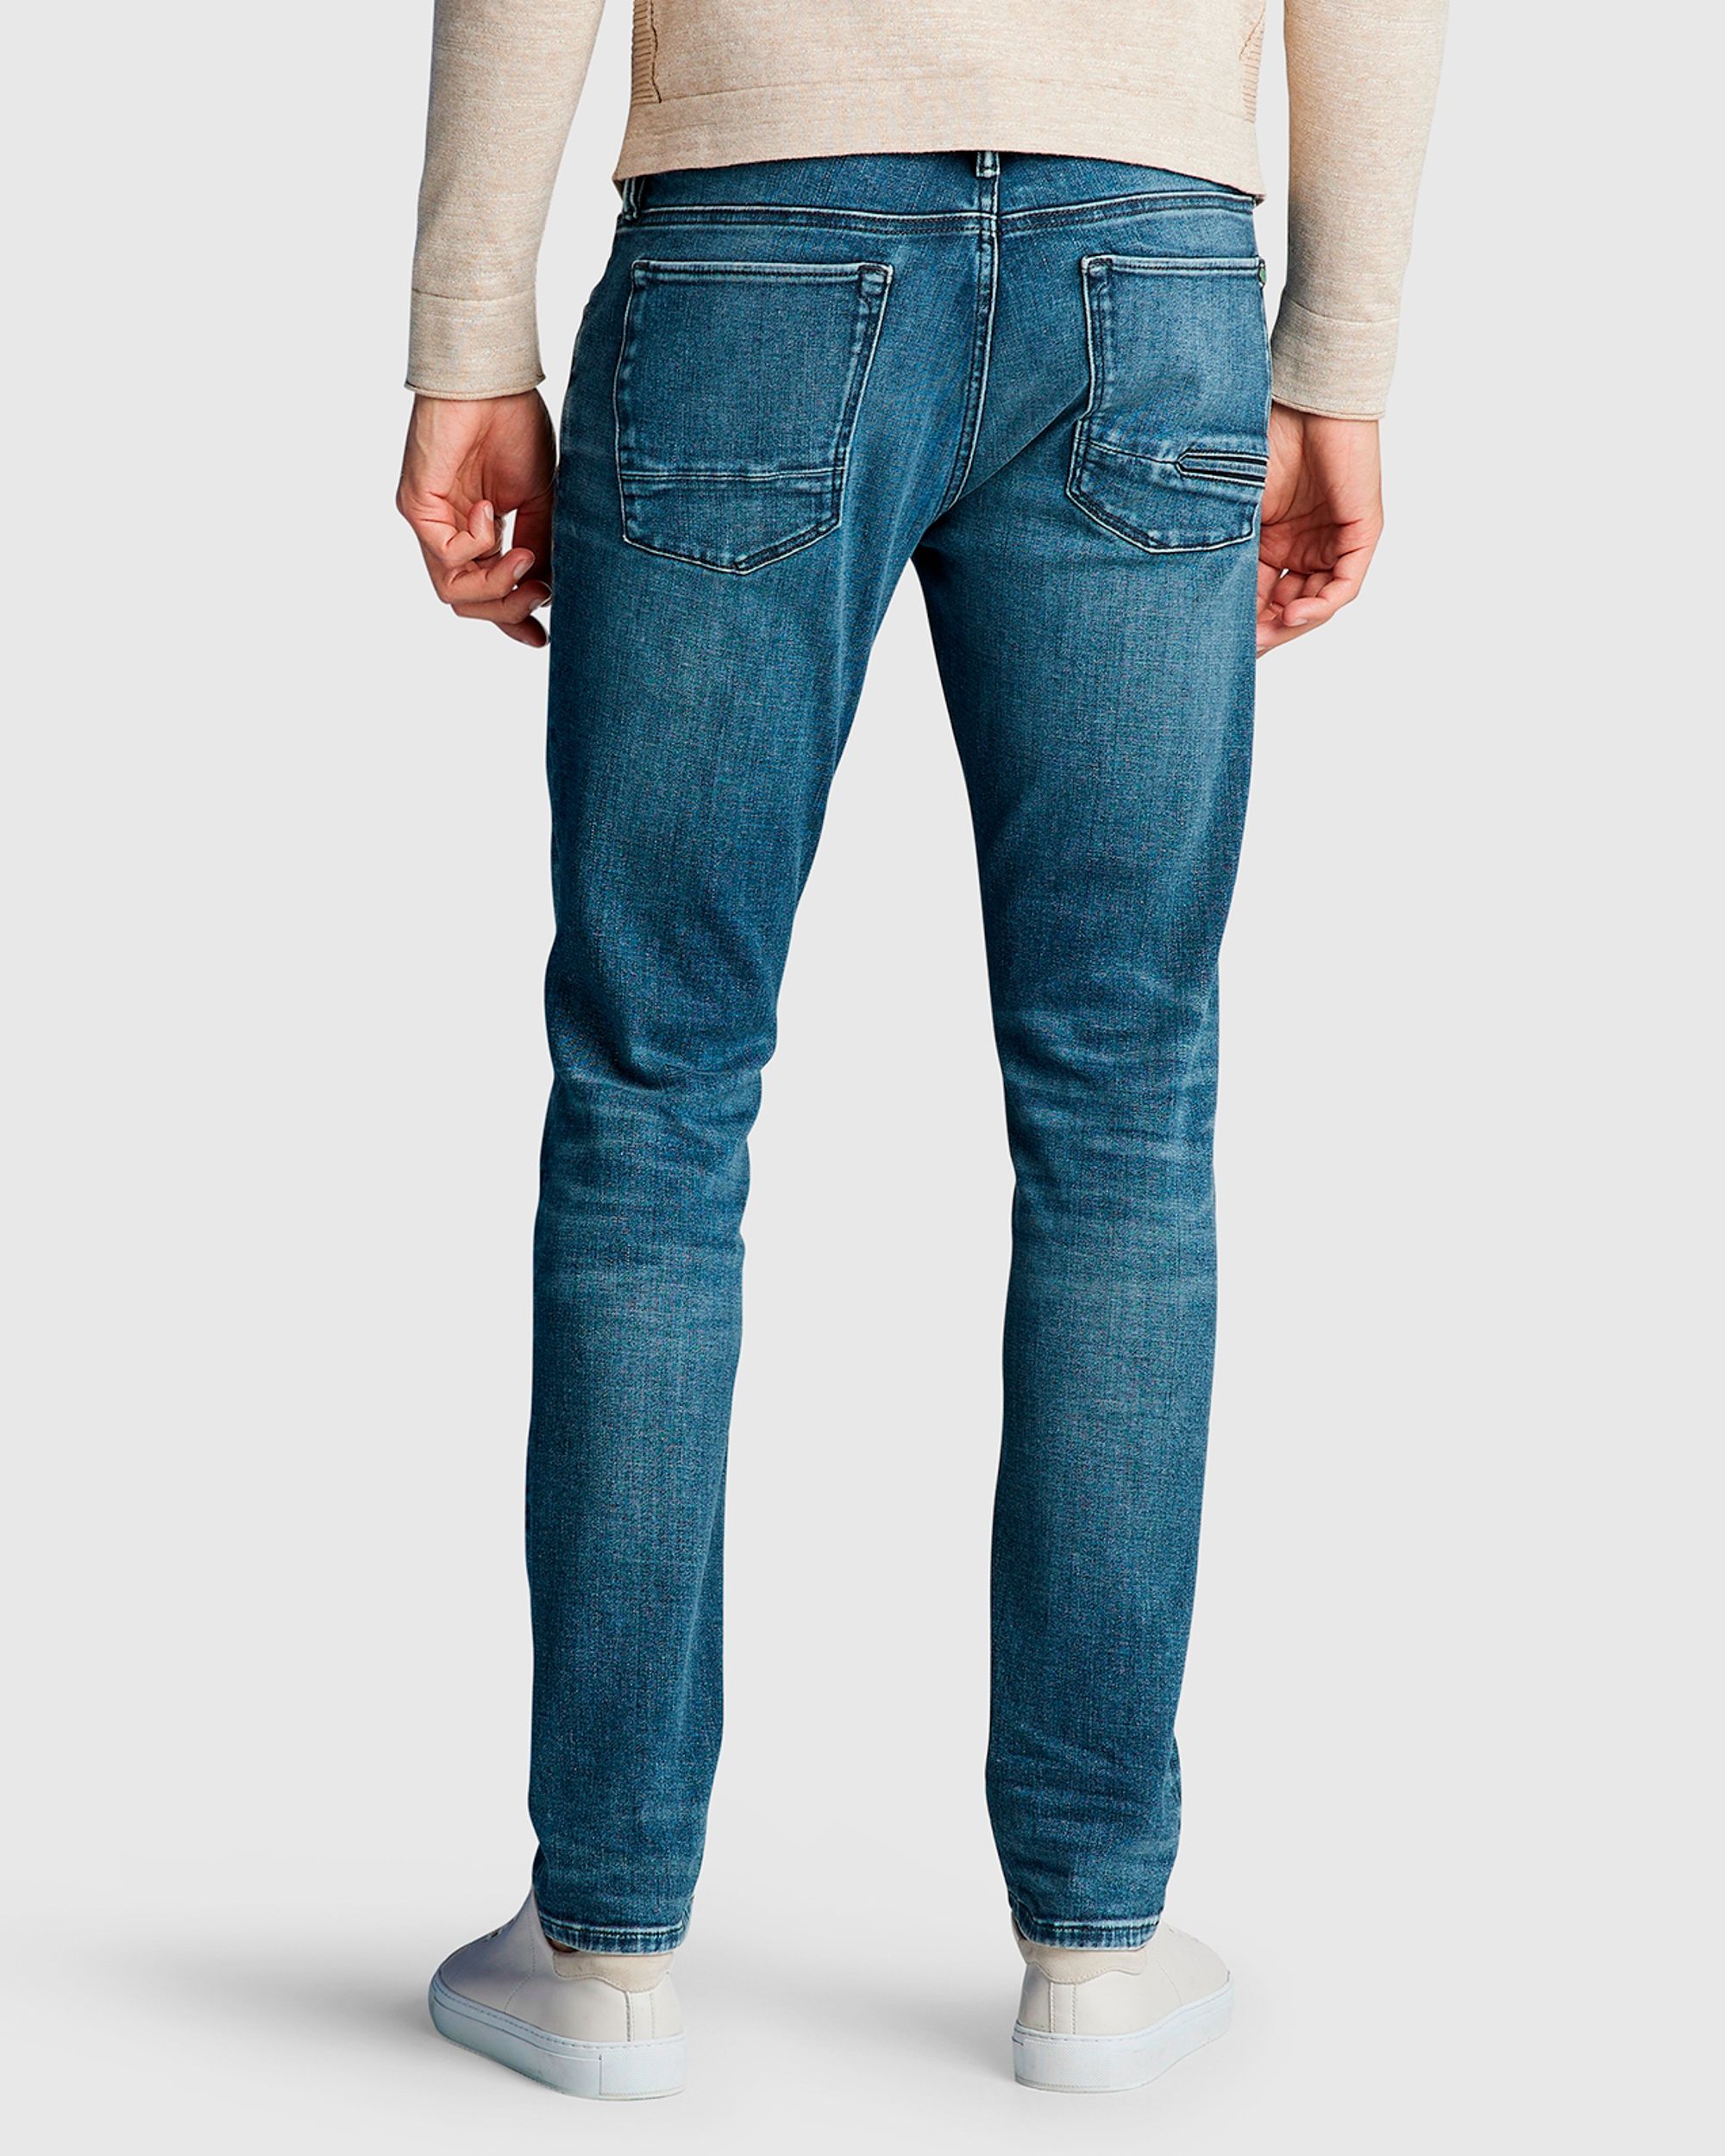 Cast Iron Riser Slim Fit Jeans Blauw 077335-001-28/32